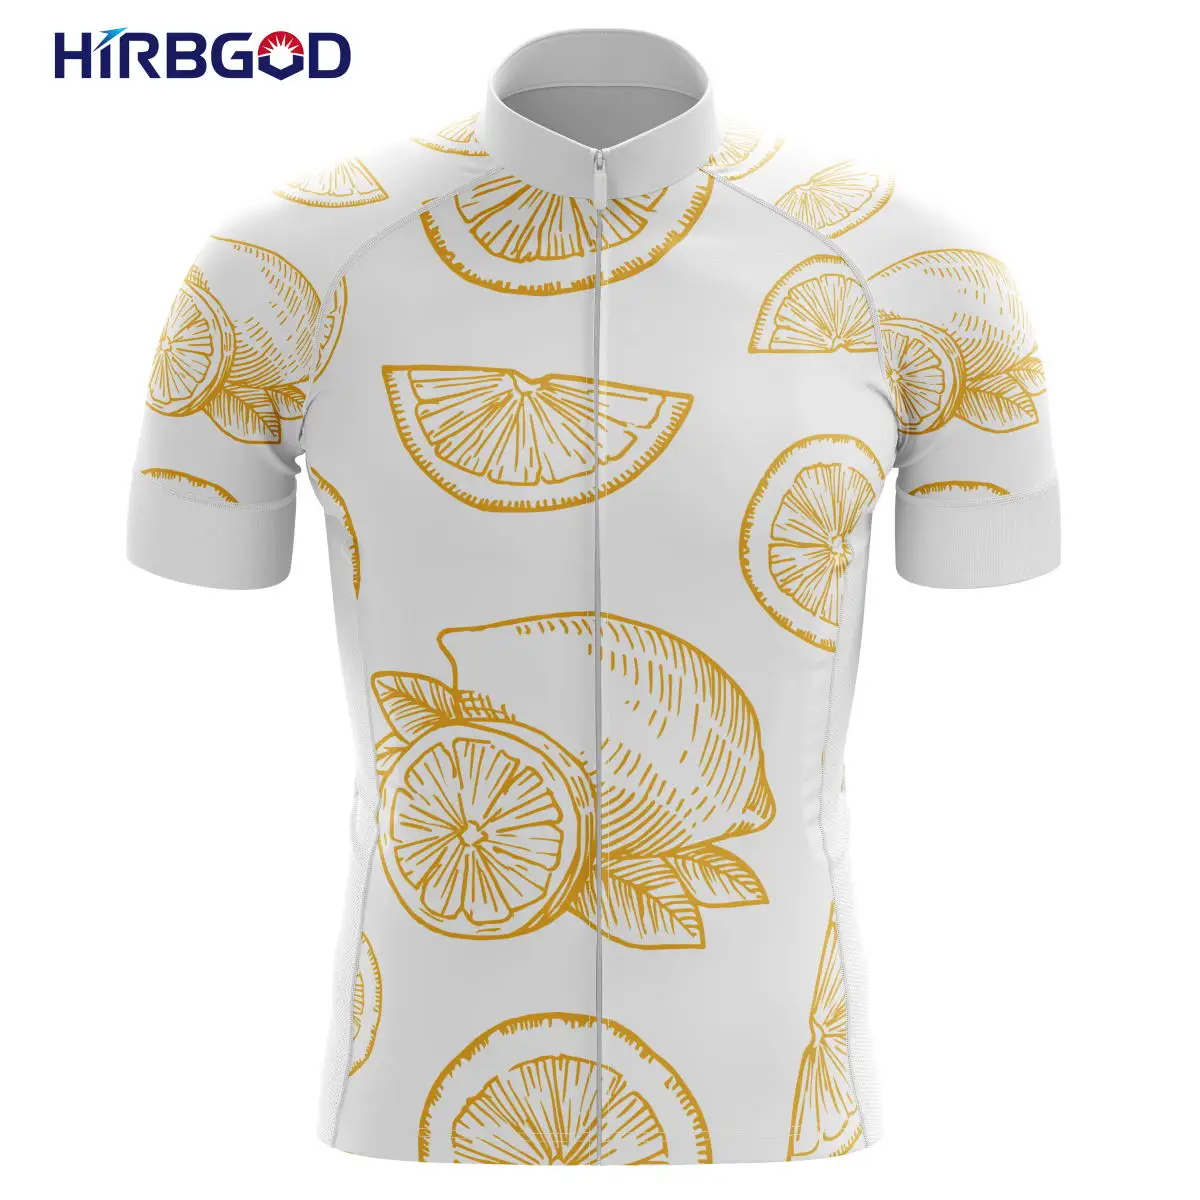 

HIRBGOD for Men Simple Fruit Stylish Lemon Bicycle Clothing Quick Dry Cycling Jersey Short Sleeve Bike Sportswear,TYZ795-01